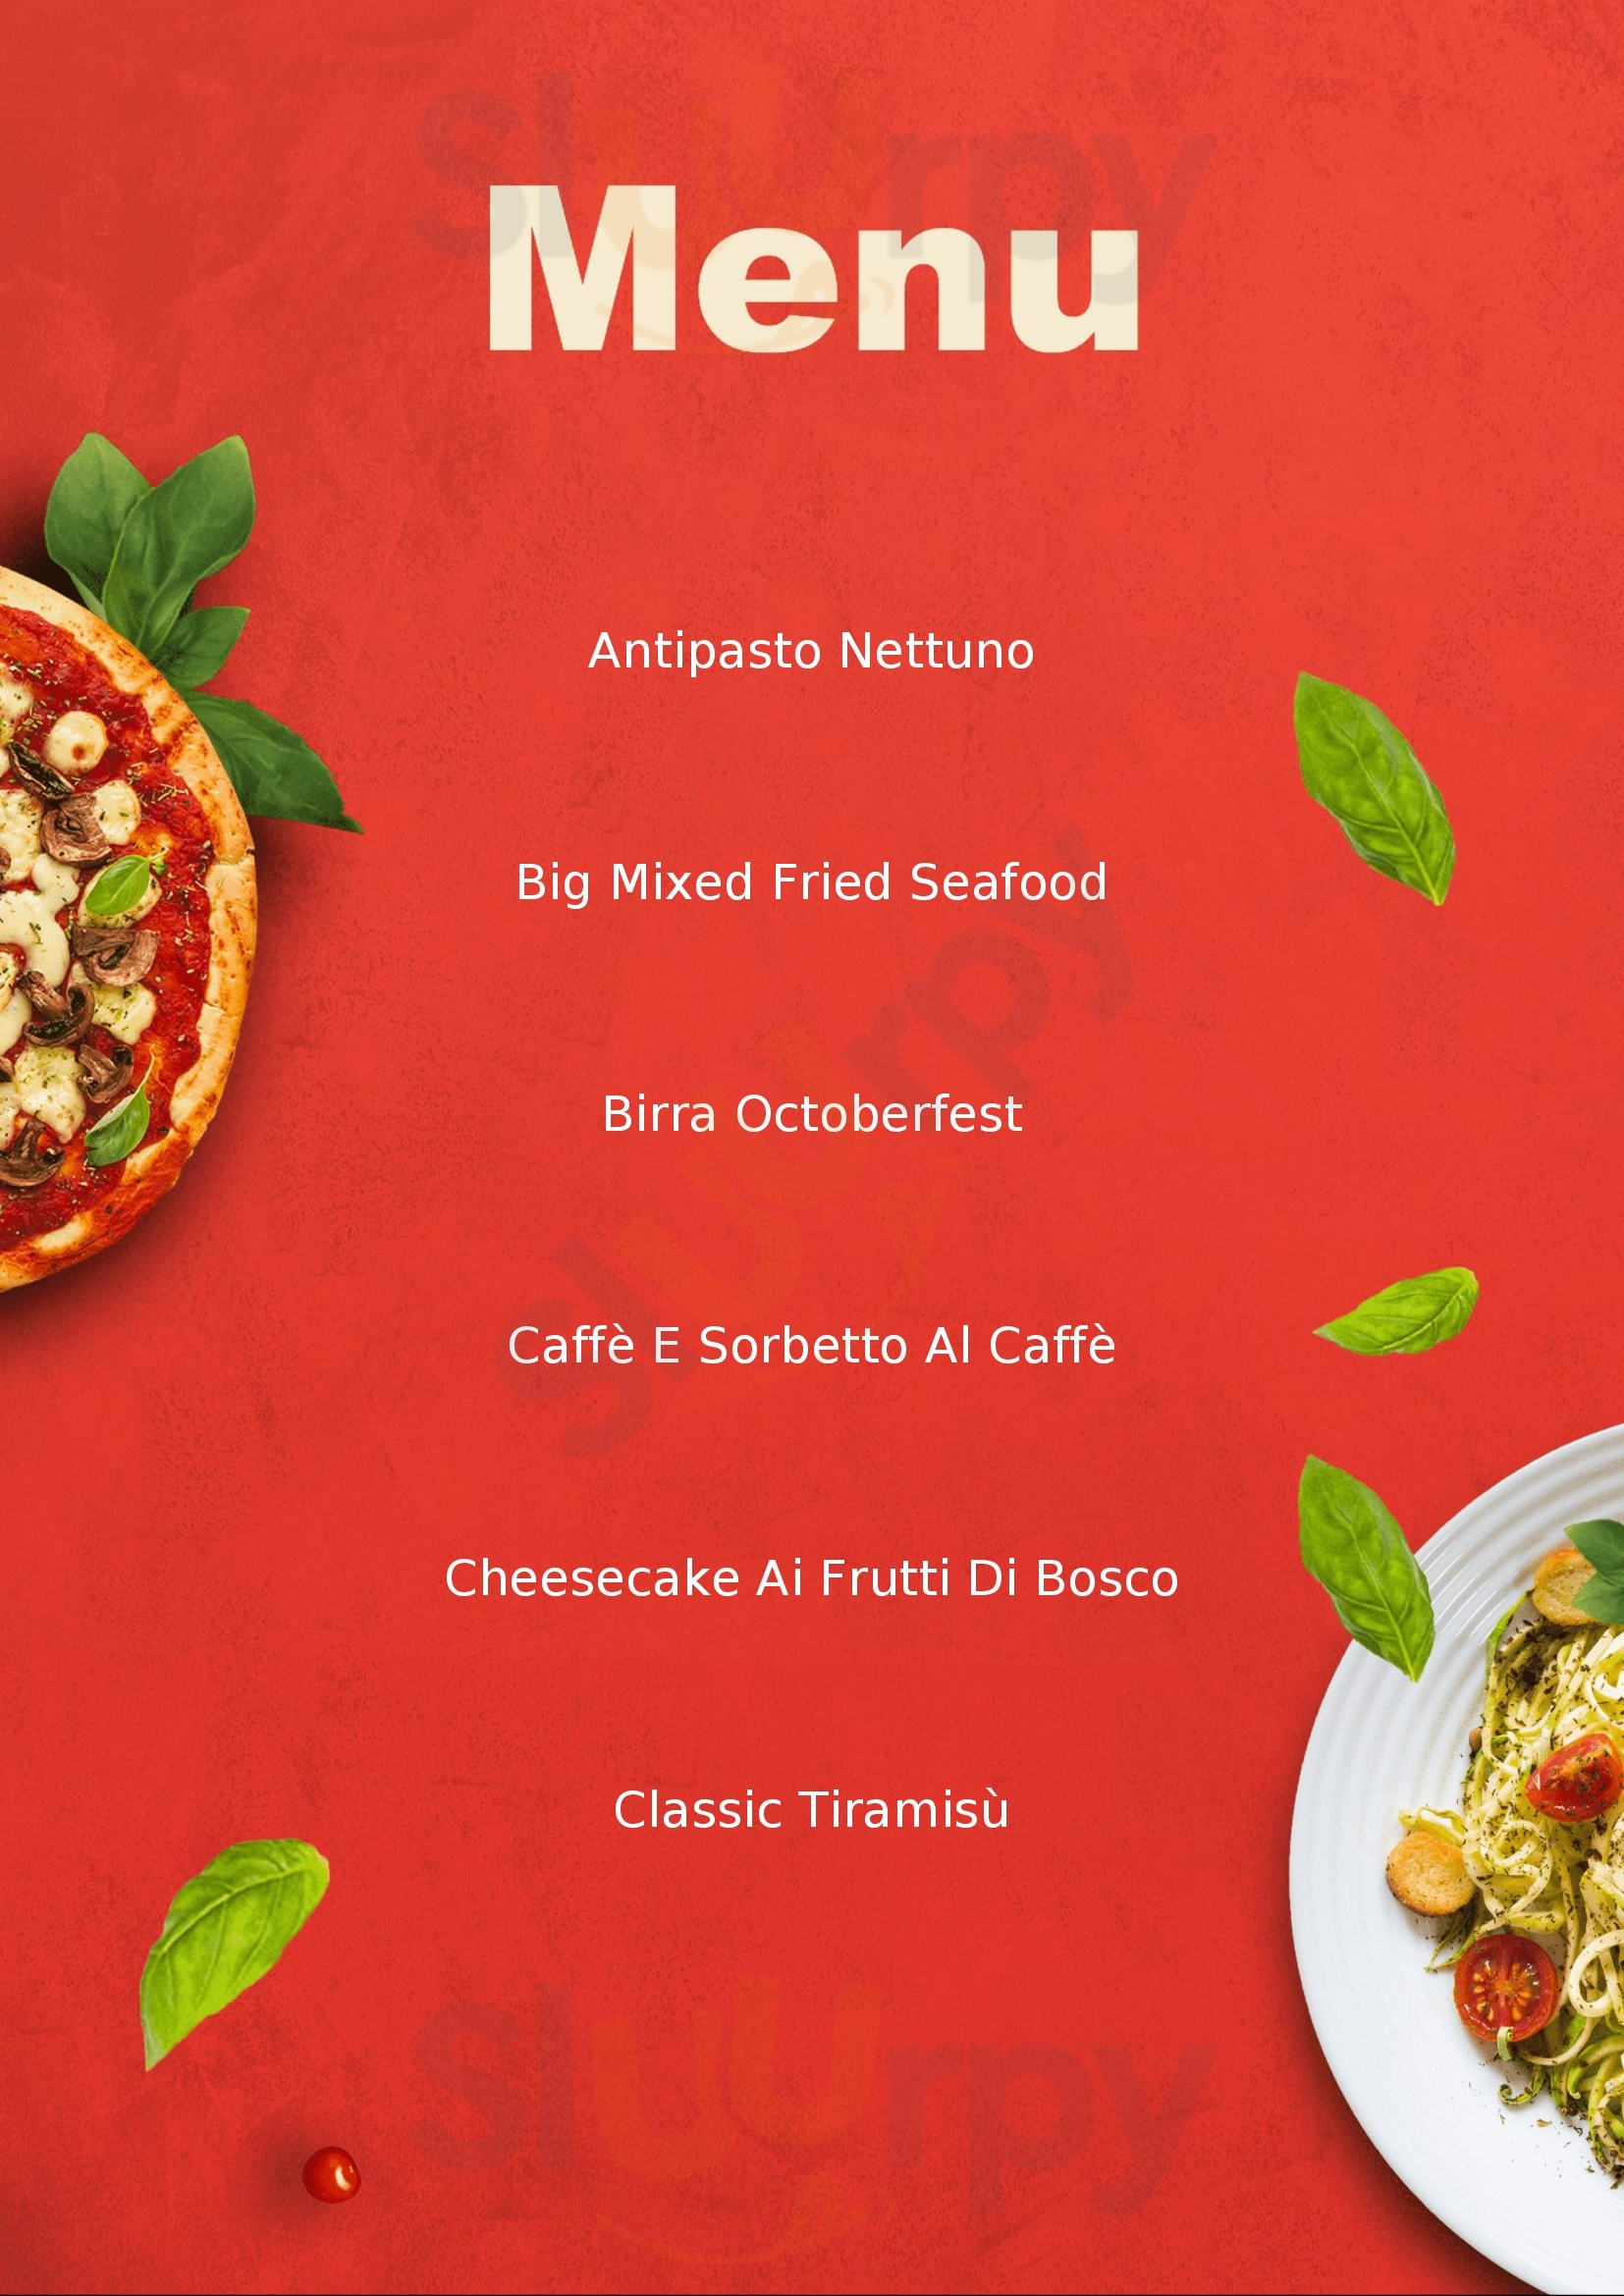 Restaurant Pizzeria Filu Verona menù 1 pagina